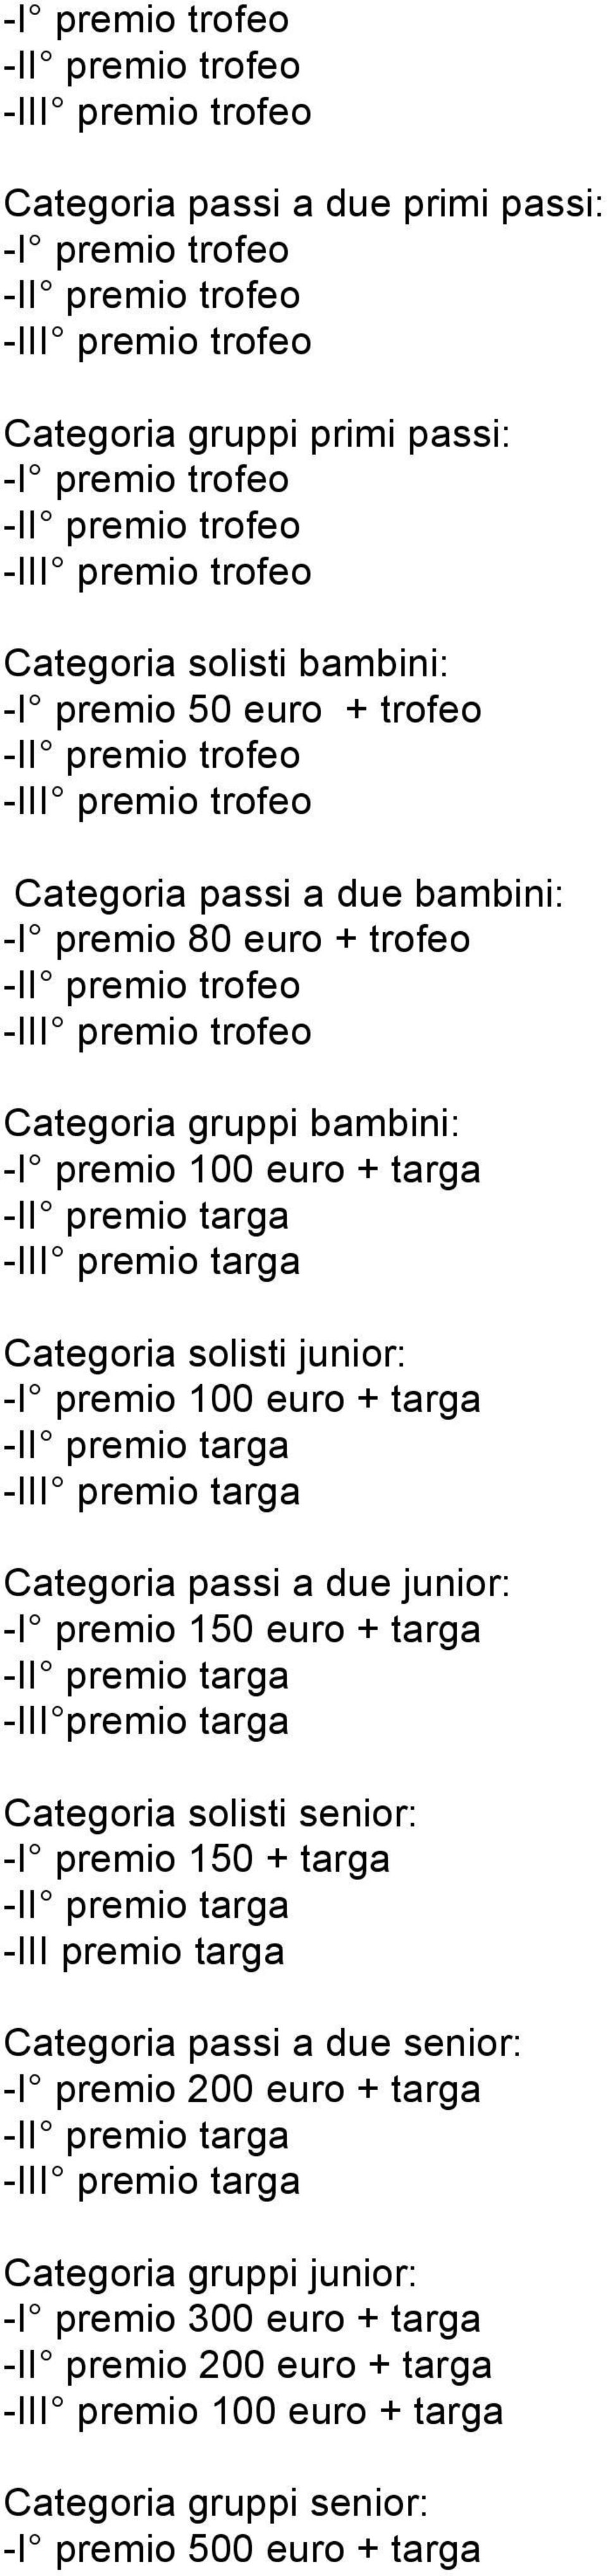 -III premio targa Categoria solisti senior: -I premio 150 + targa -III premio targa Categoria passi a due senior: -I premio 200 euro + targa